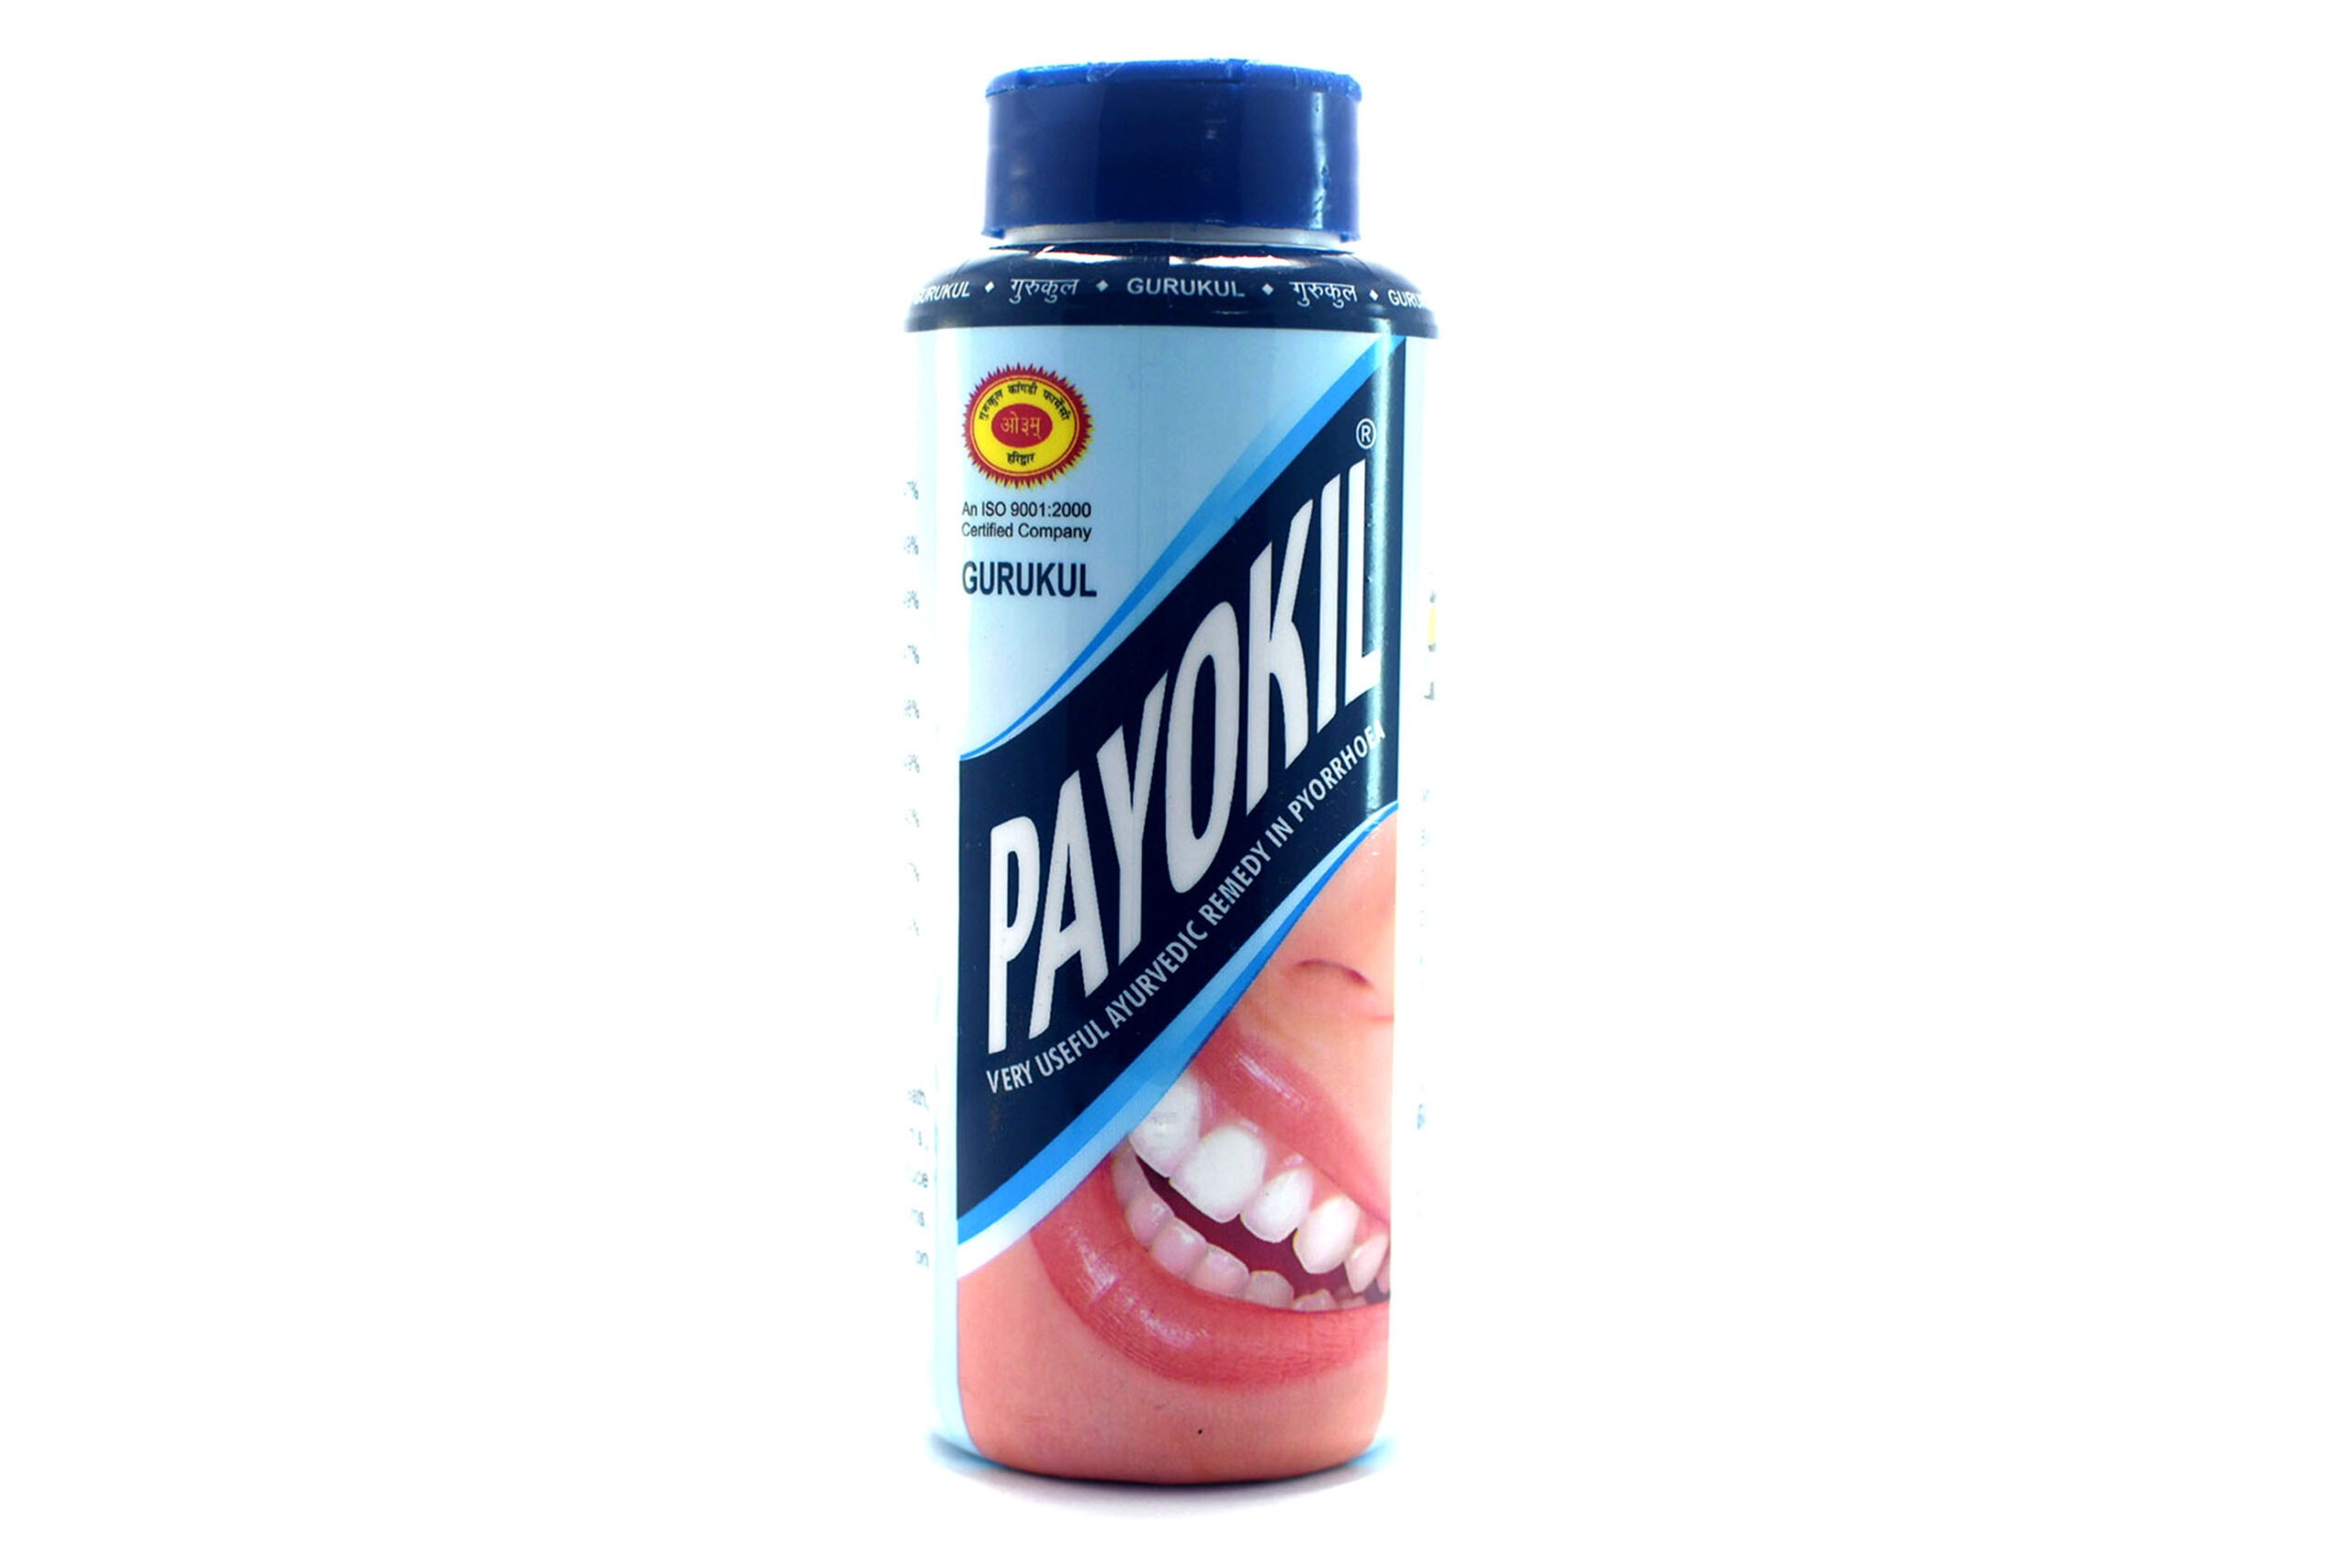 Payokil natural tooth powder